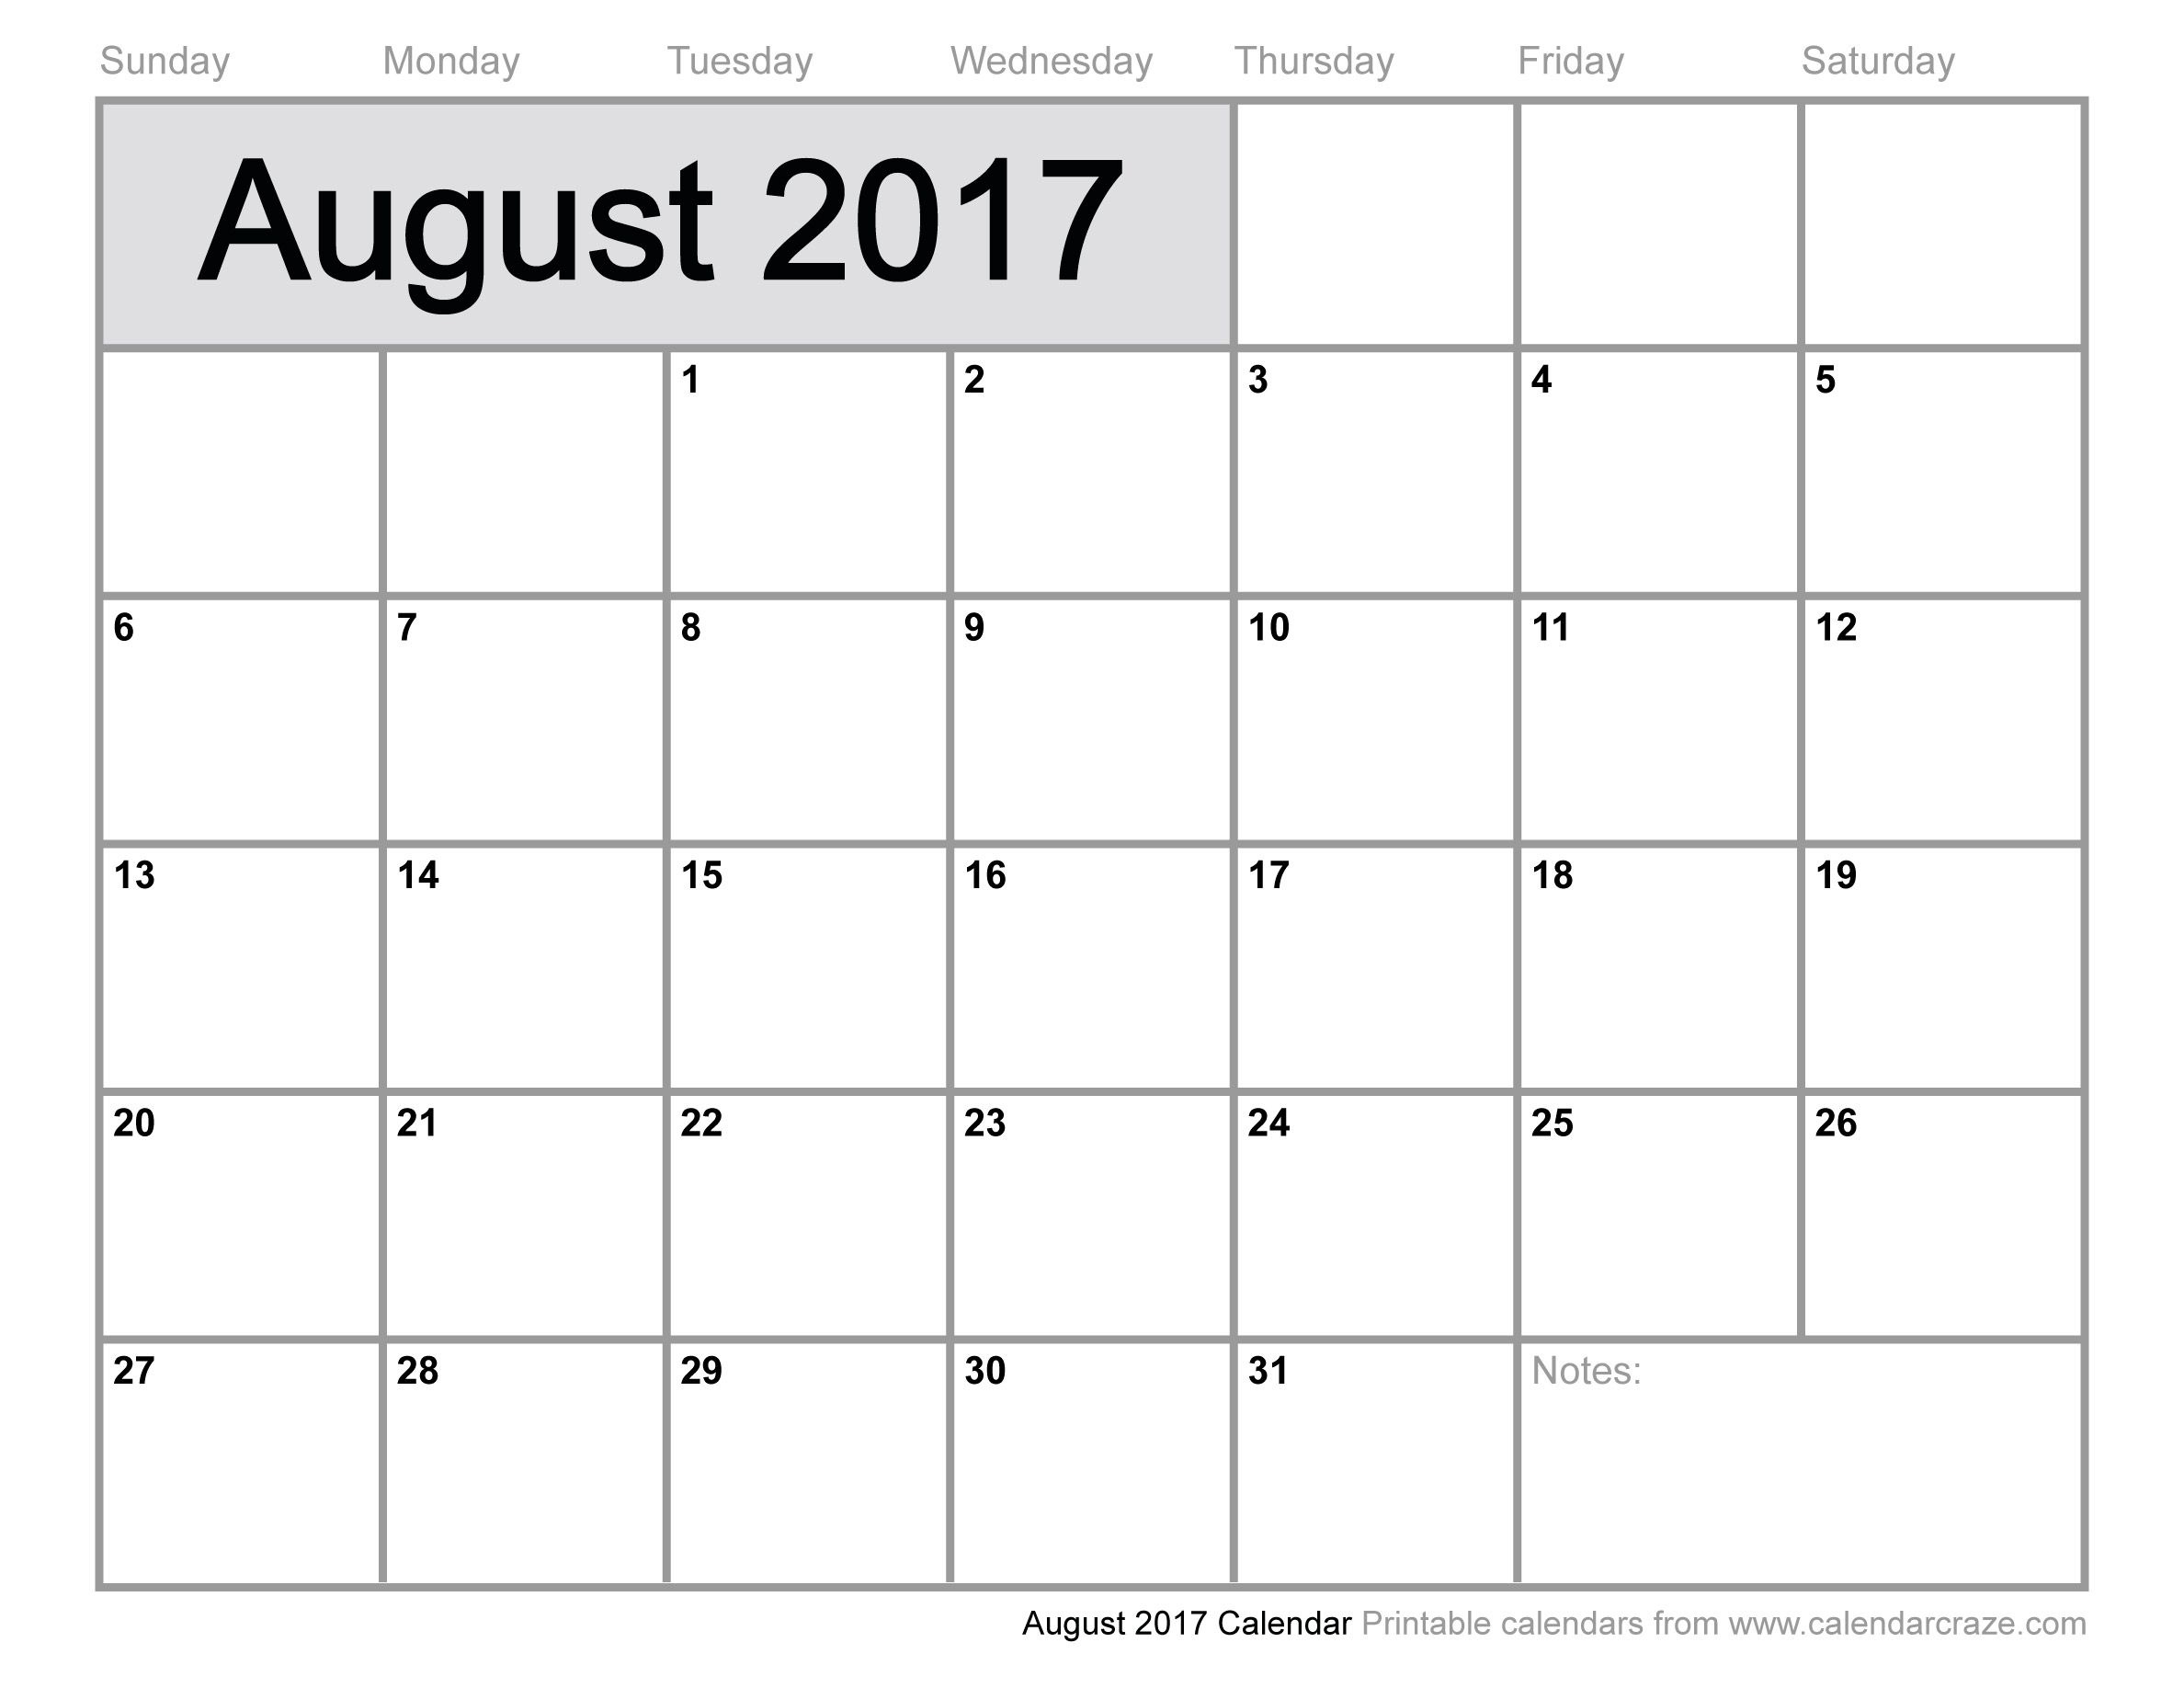 August 2017 Calendar Uk, August 2017 Uk Calendar, August Calendar Uk - Free Printable August 2017